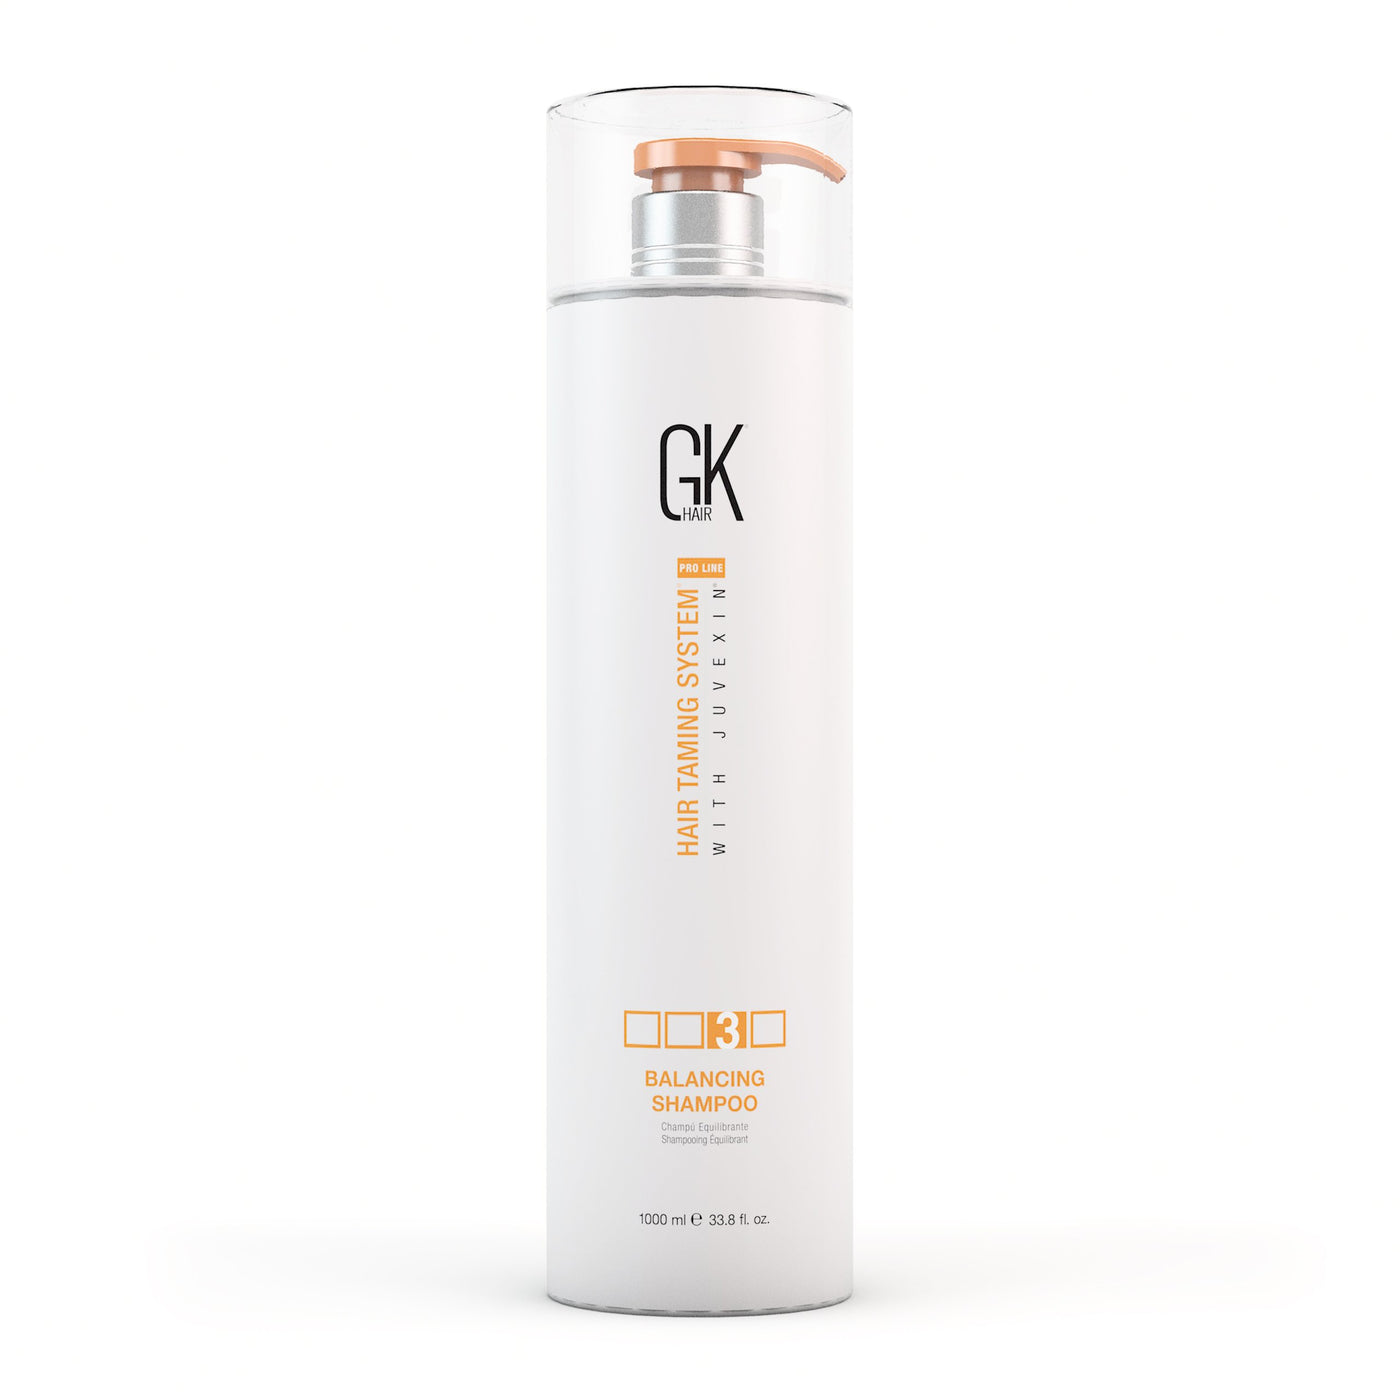 oily hair shampoo and conditioner - GK Hair